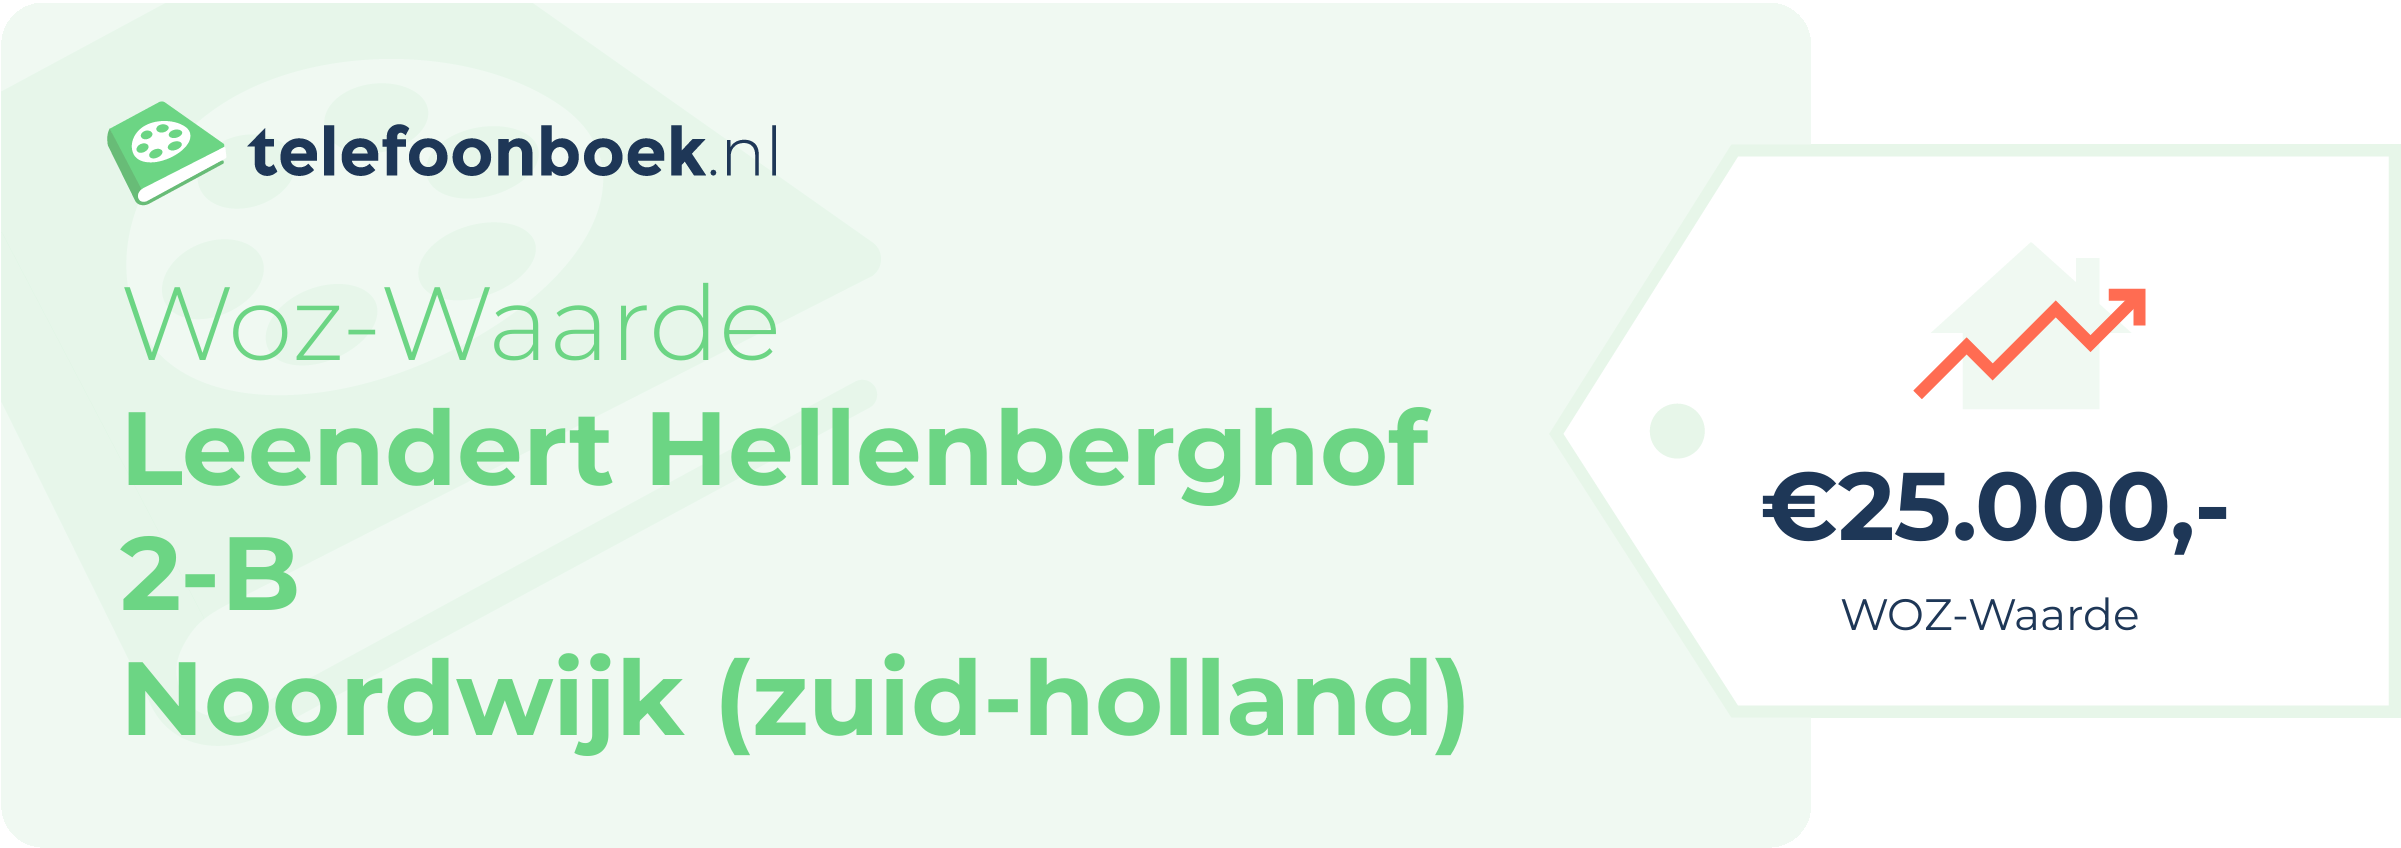 WOZ-waarde Leendert Hellenberghof 2-B Noordwijk (Zuid-Holland)